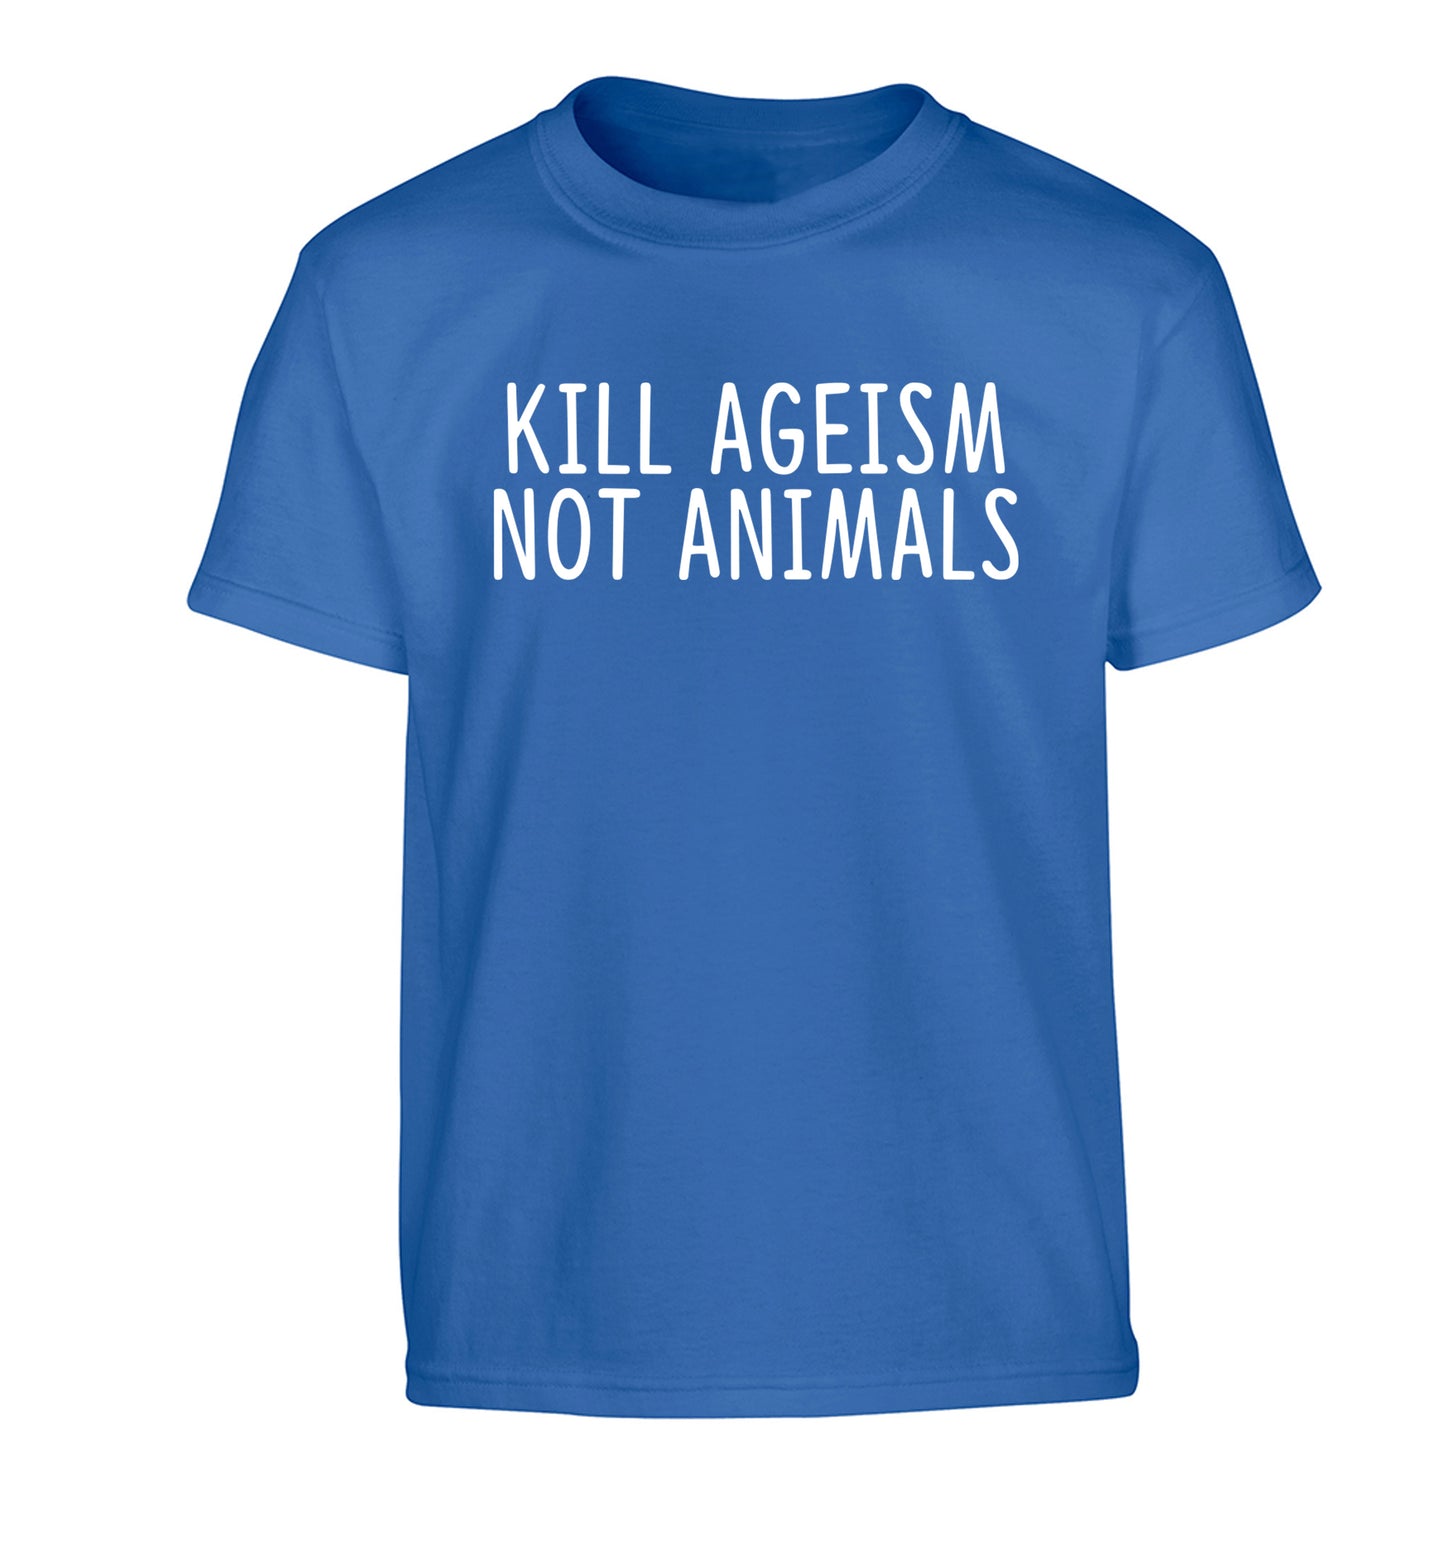 Kill Ageism Not Animals Children's blue Tshirt 12-13 Years